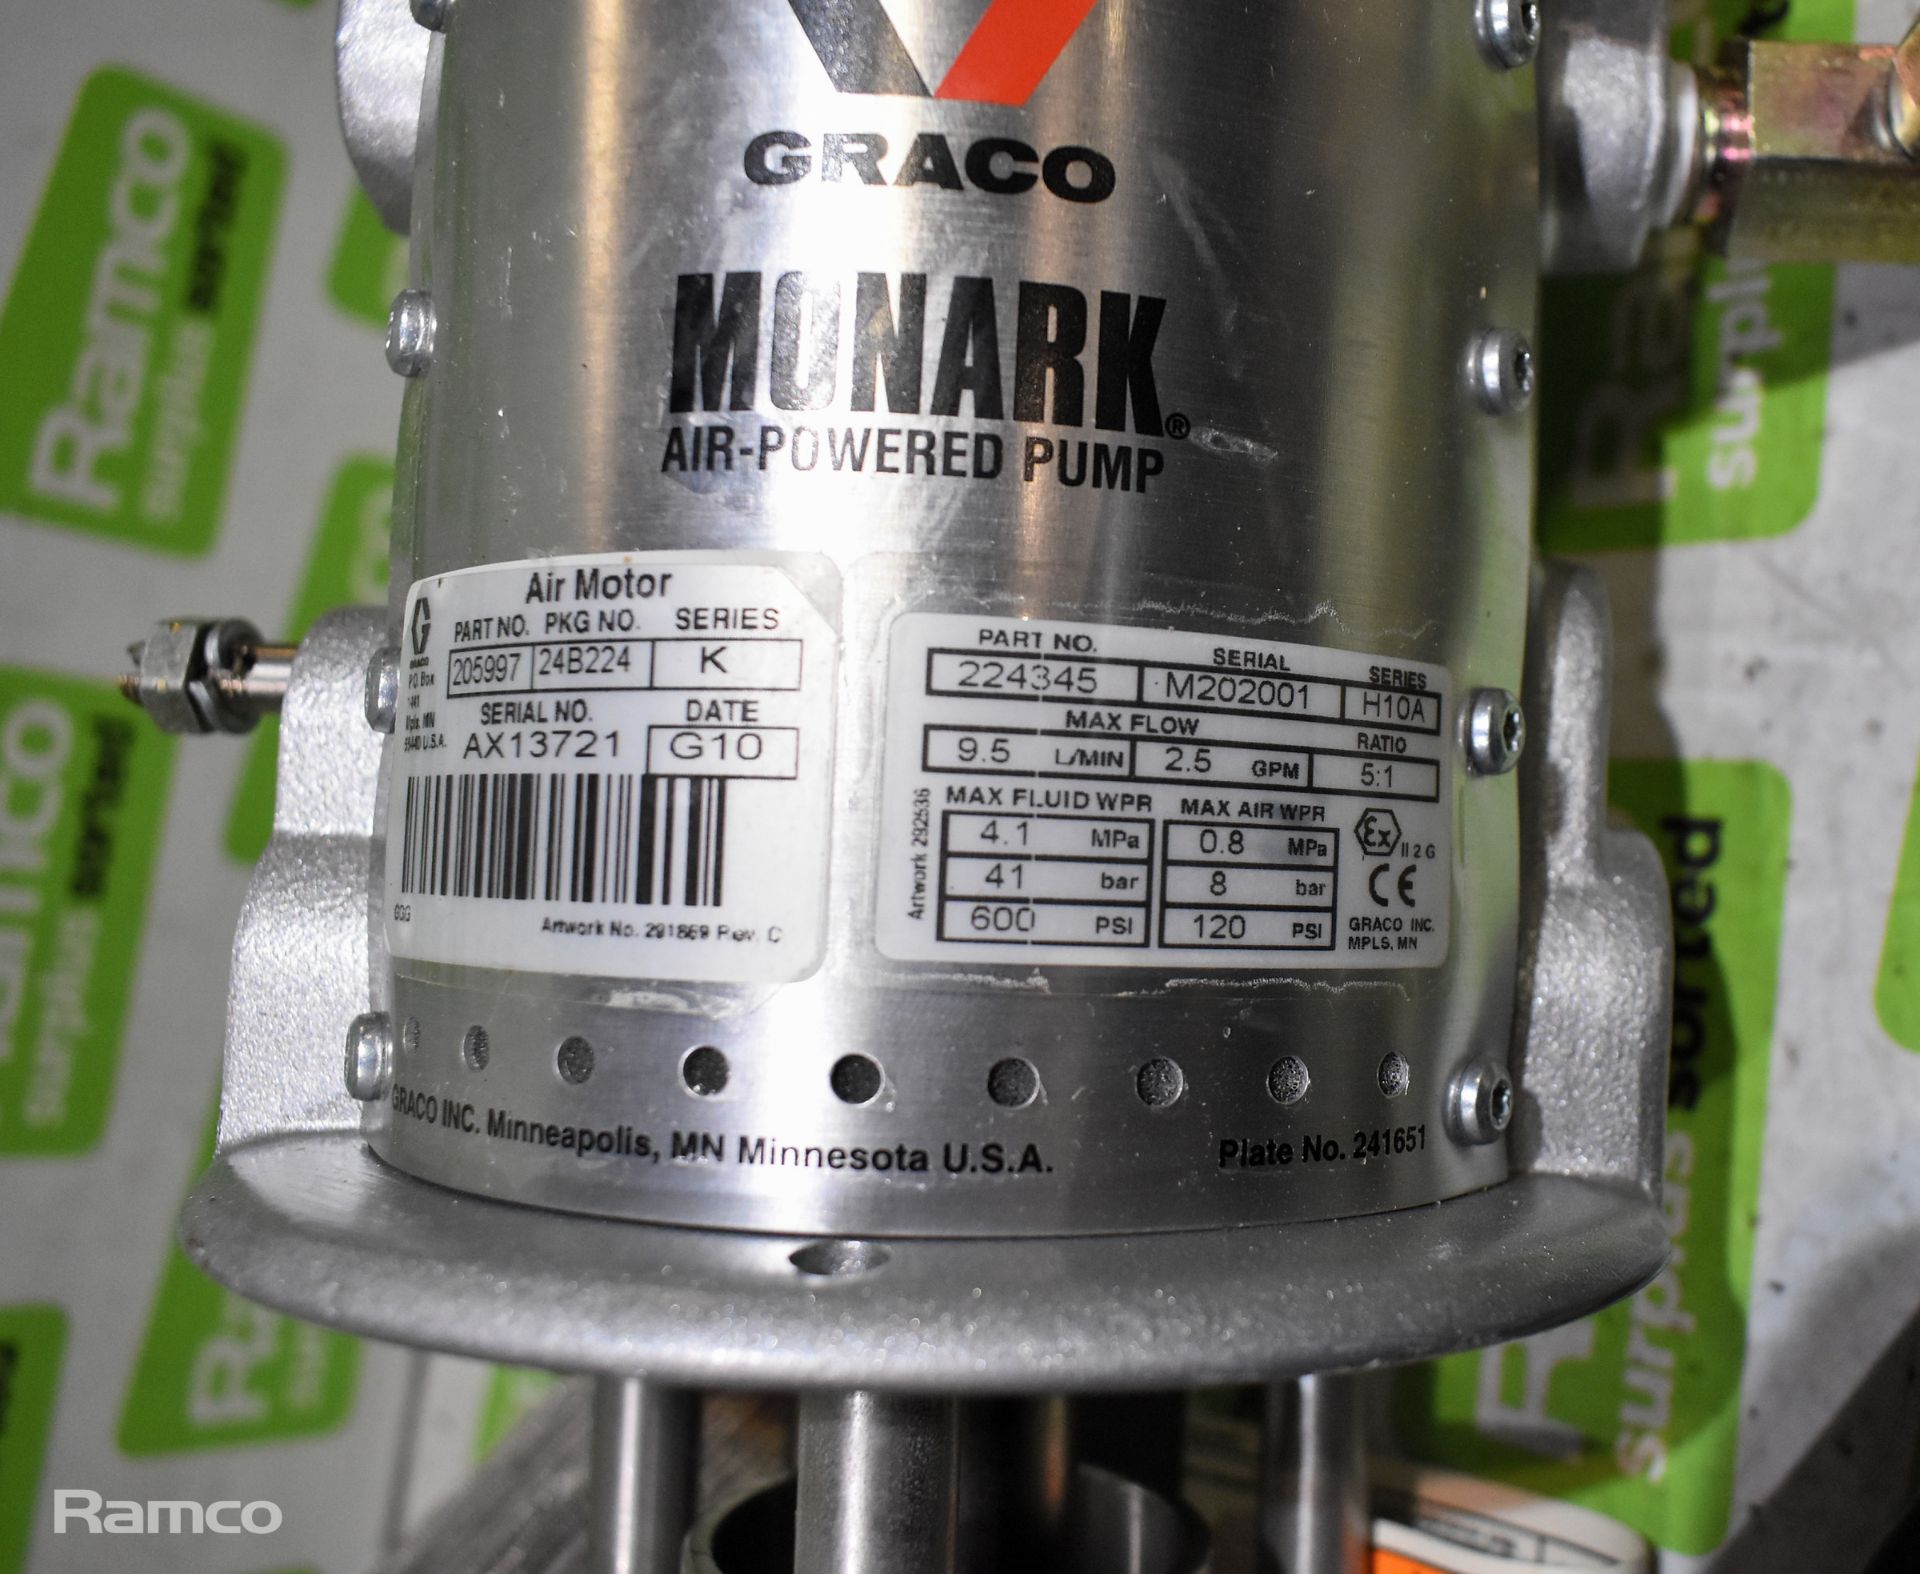 Graco Monark 205997 air powered drum pump with stainless steel Hydra-Clean spray gun - max flow: 9.5 - Image 3 of 5